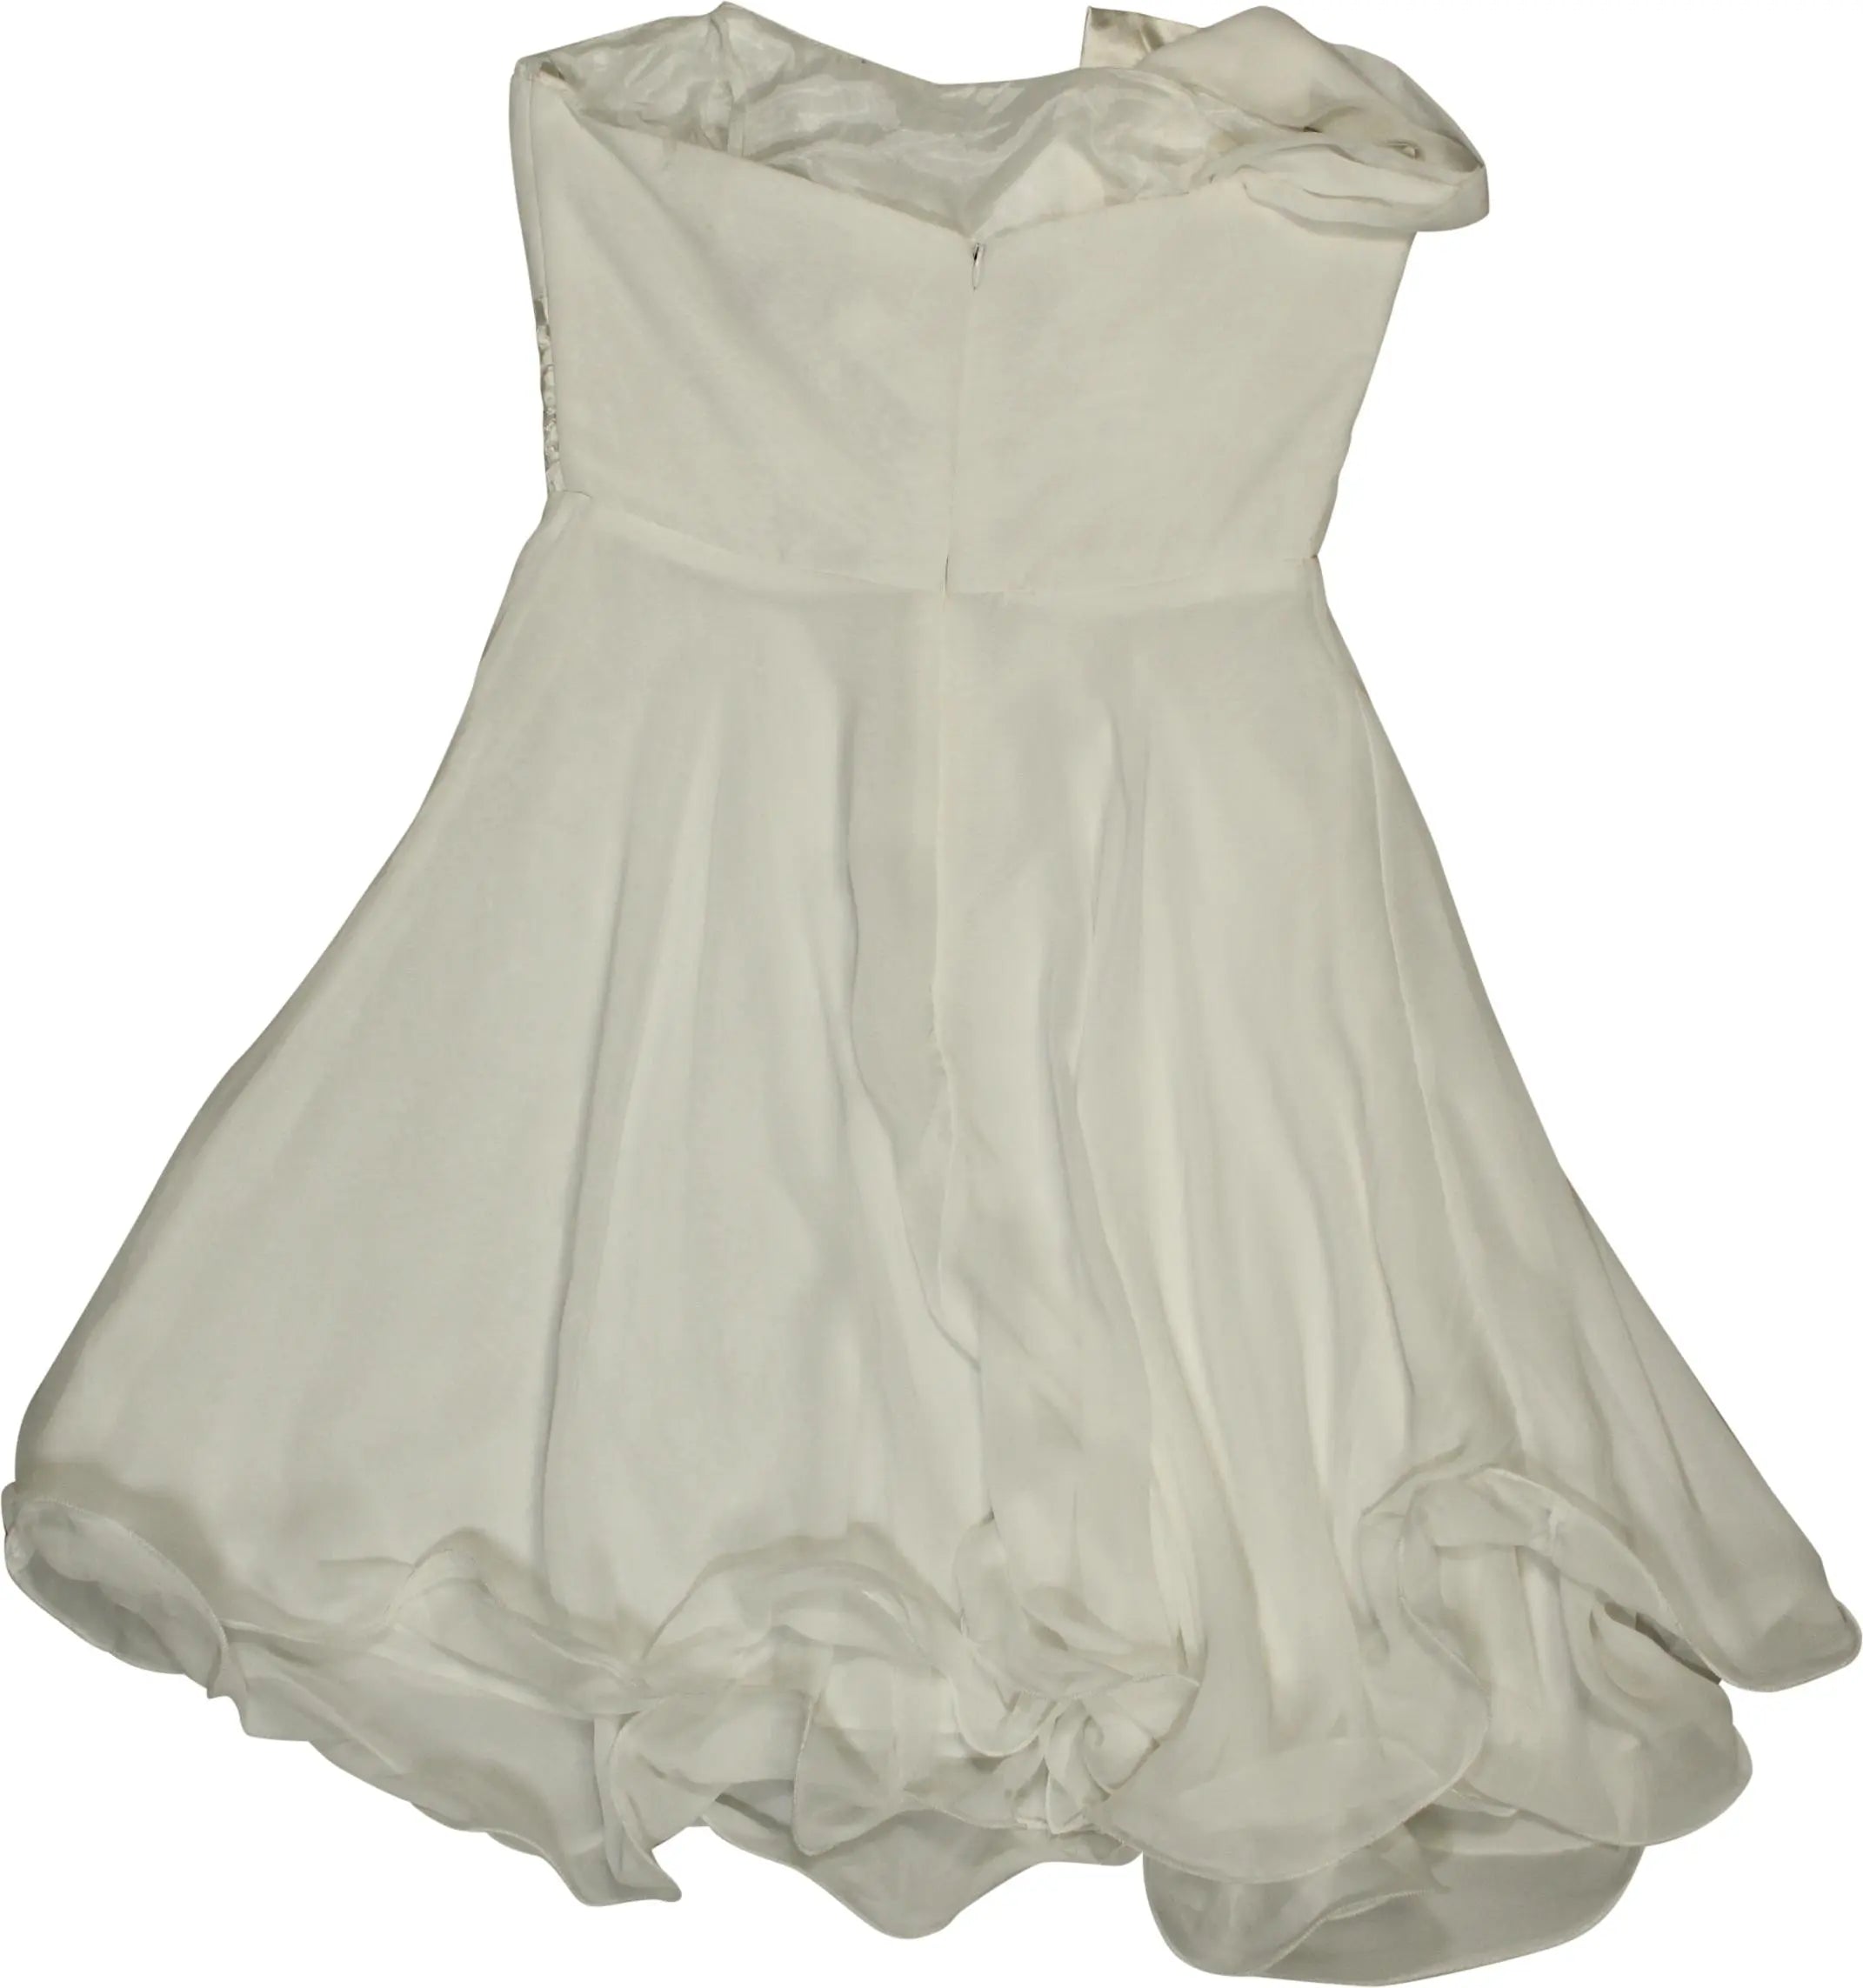 Ceci Fashion - Asymmetrical Chiffon Gala Dress- ThriftTale.com - Vintage and second handclothing